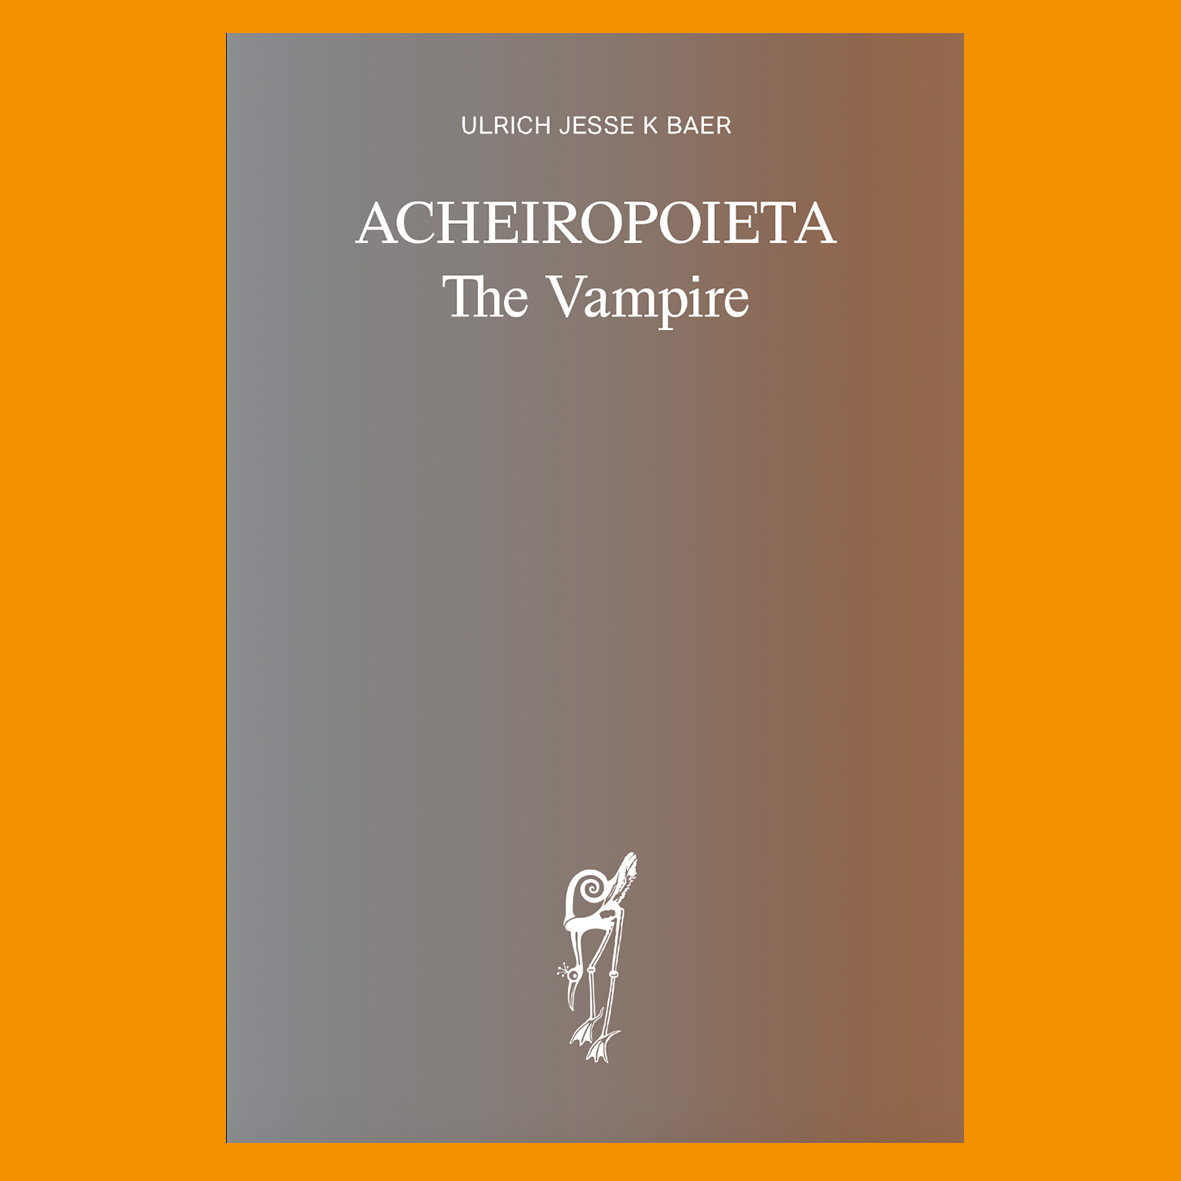 Acheiropoieta: The Vampire